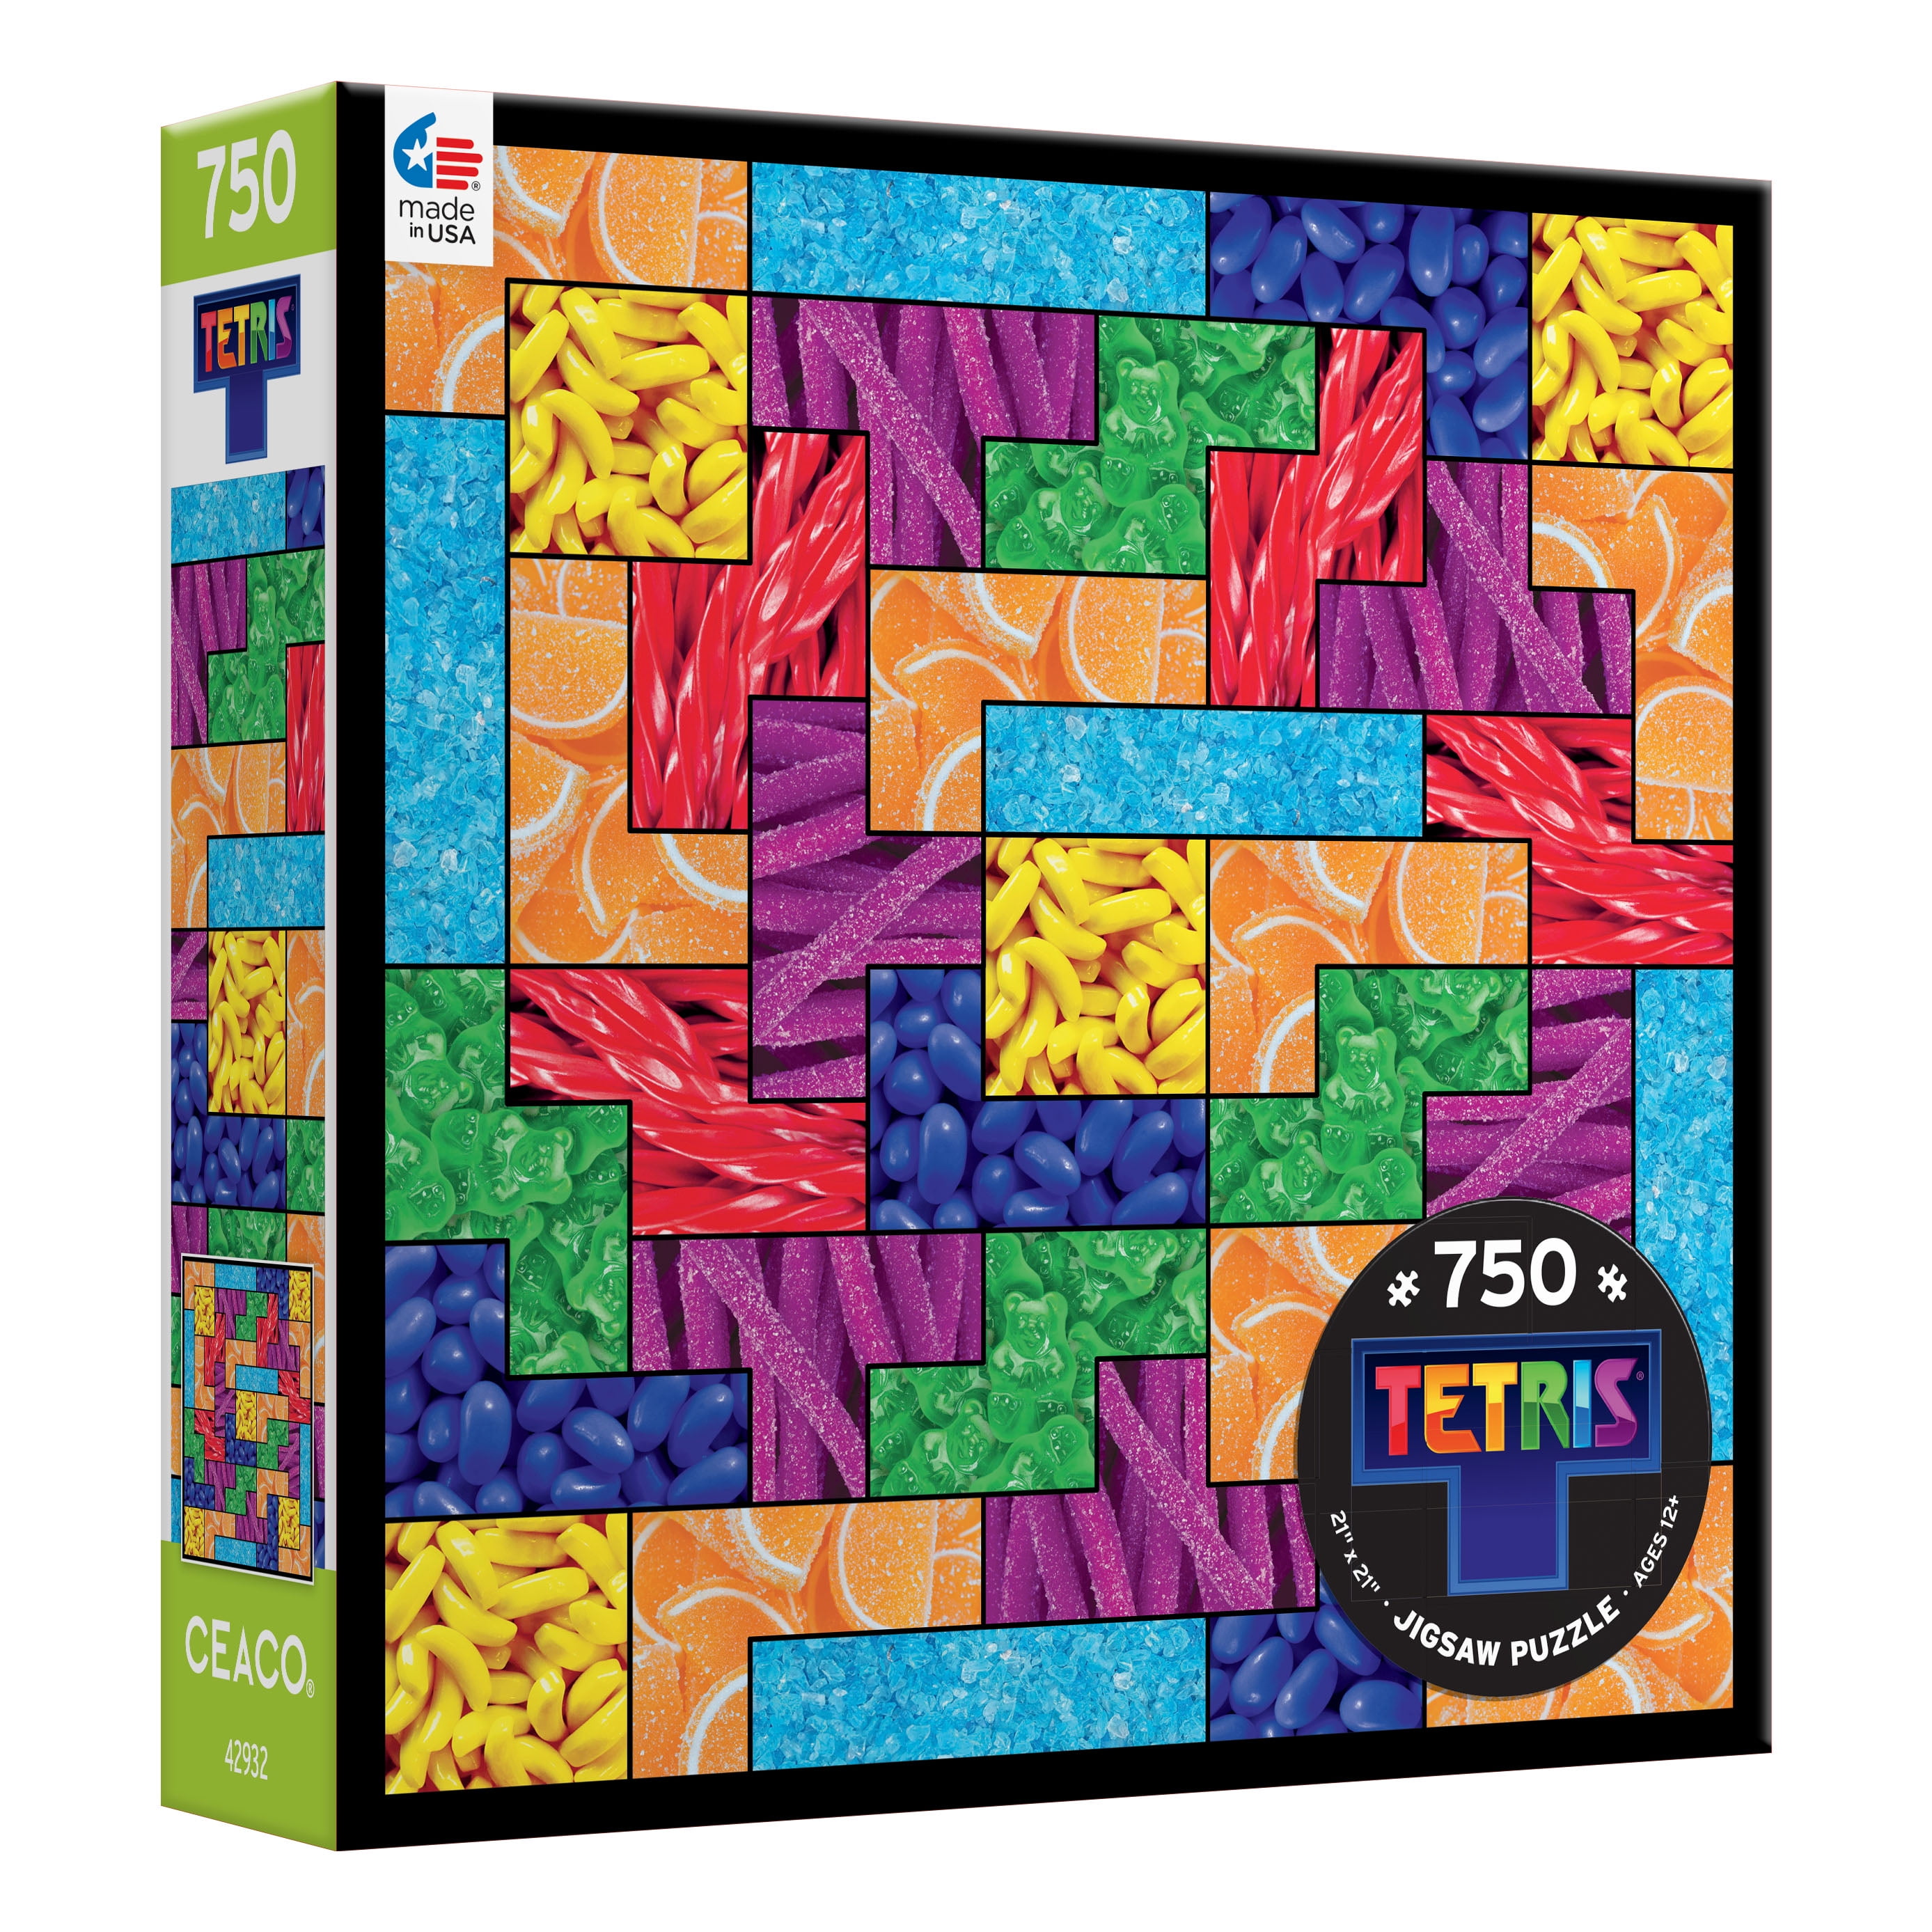 Tetris Jigsaw Puzzle 500 Pieces New